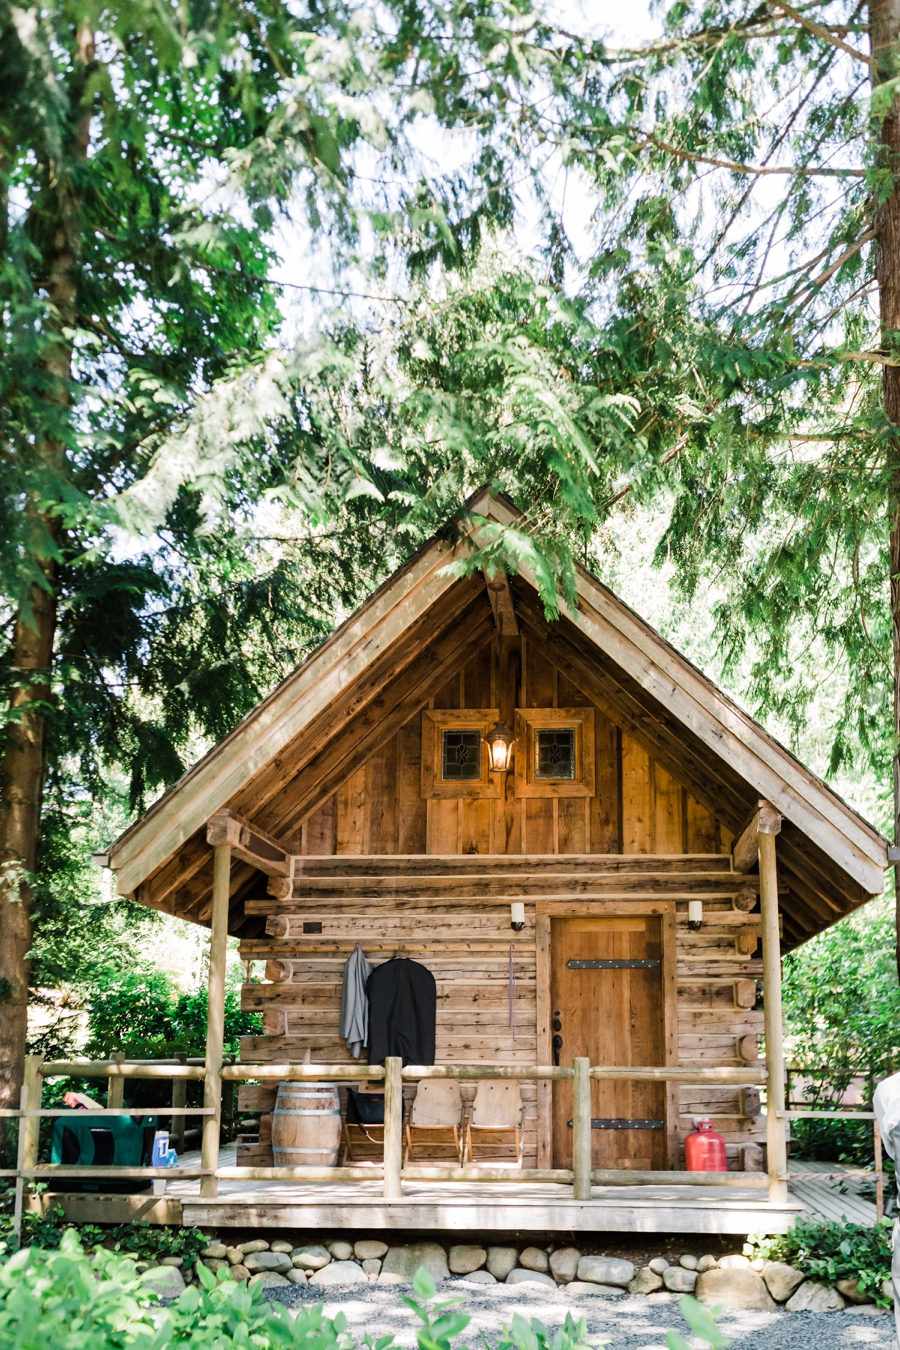 Groom's cabin at Snohomish wedding venue Green Gates at Flowing Lake